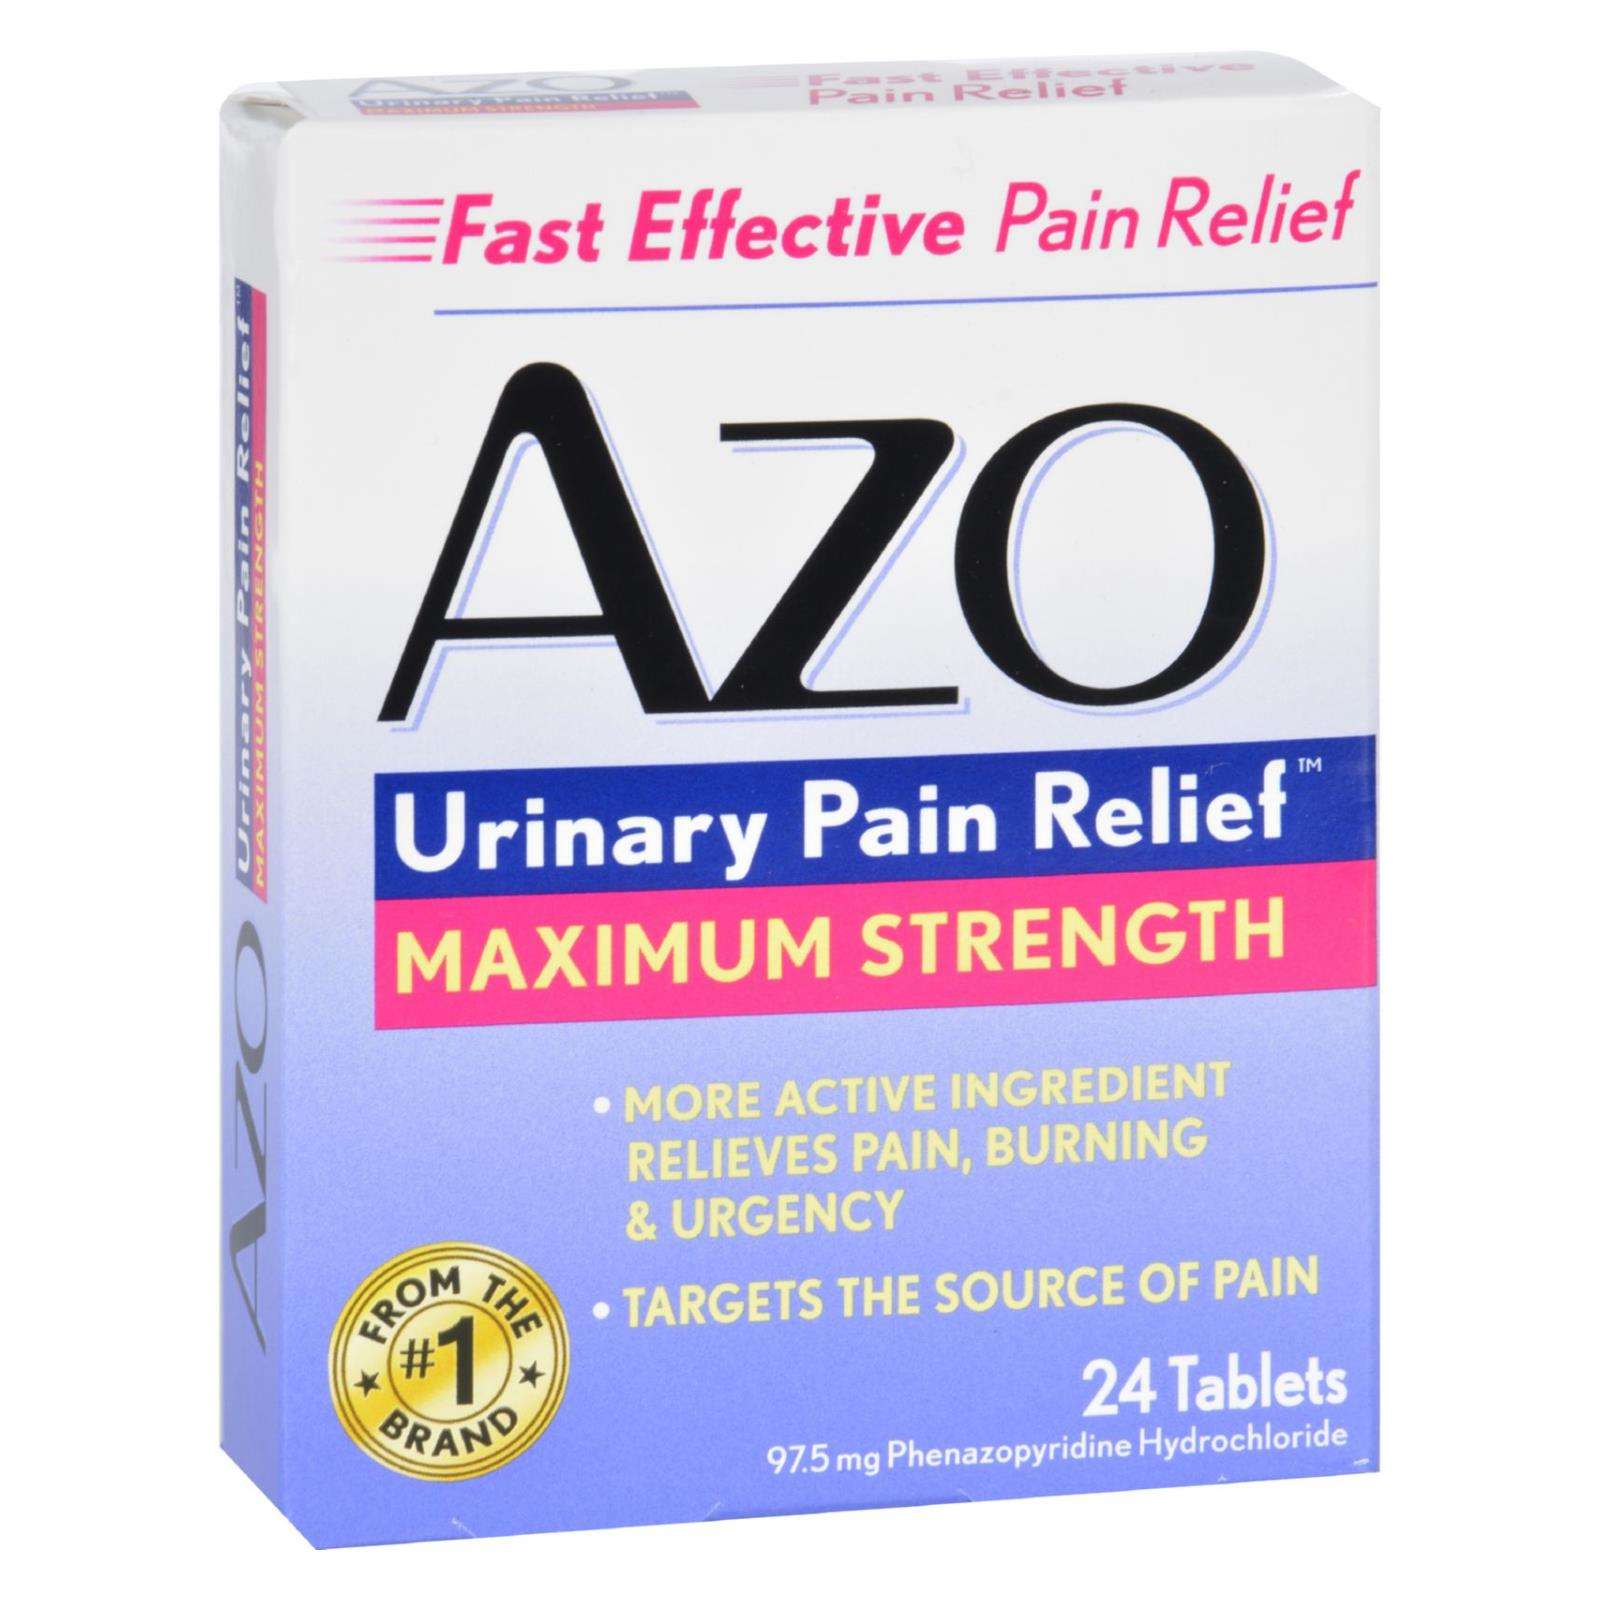 Azo Urinary Pain Relief